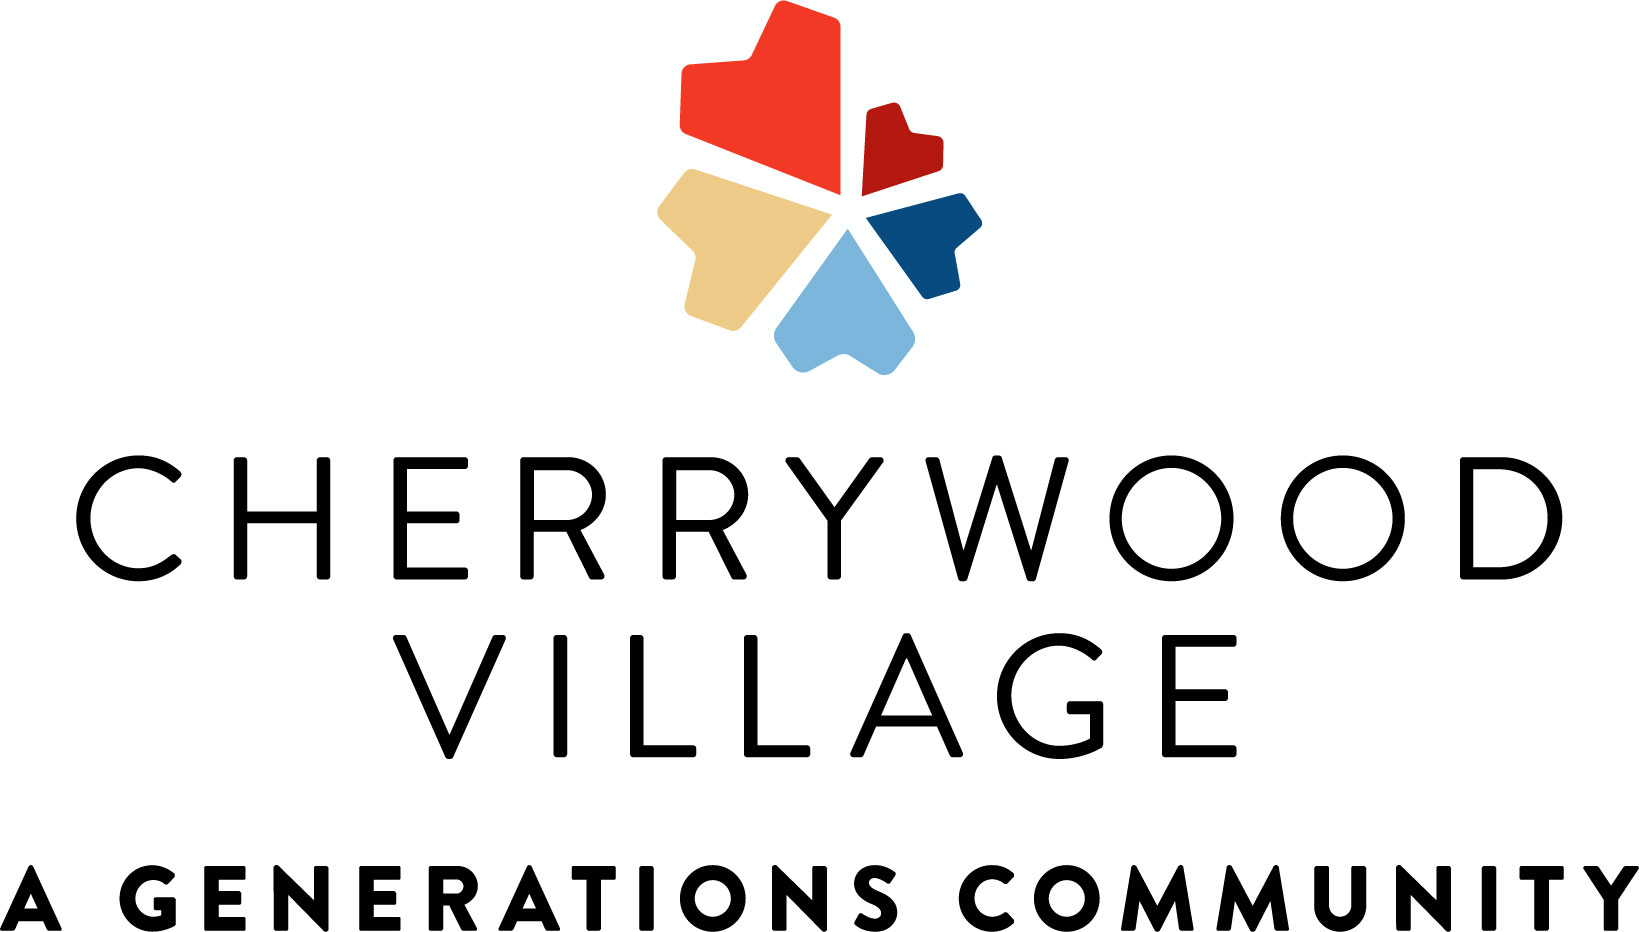 Generations_Hearts_Logo_Generations_Cherrywood_Village_logo_Generations_Cherrywood_Village_logo